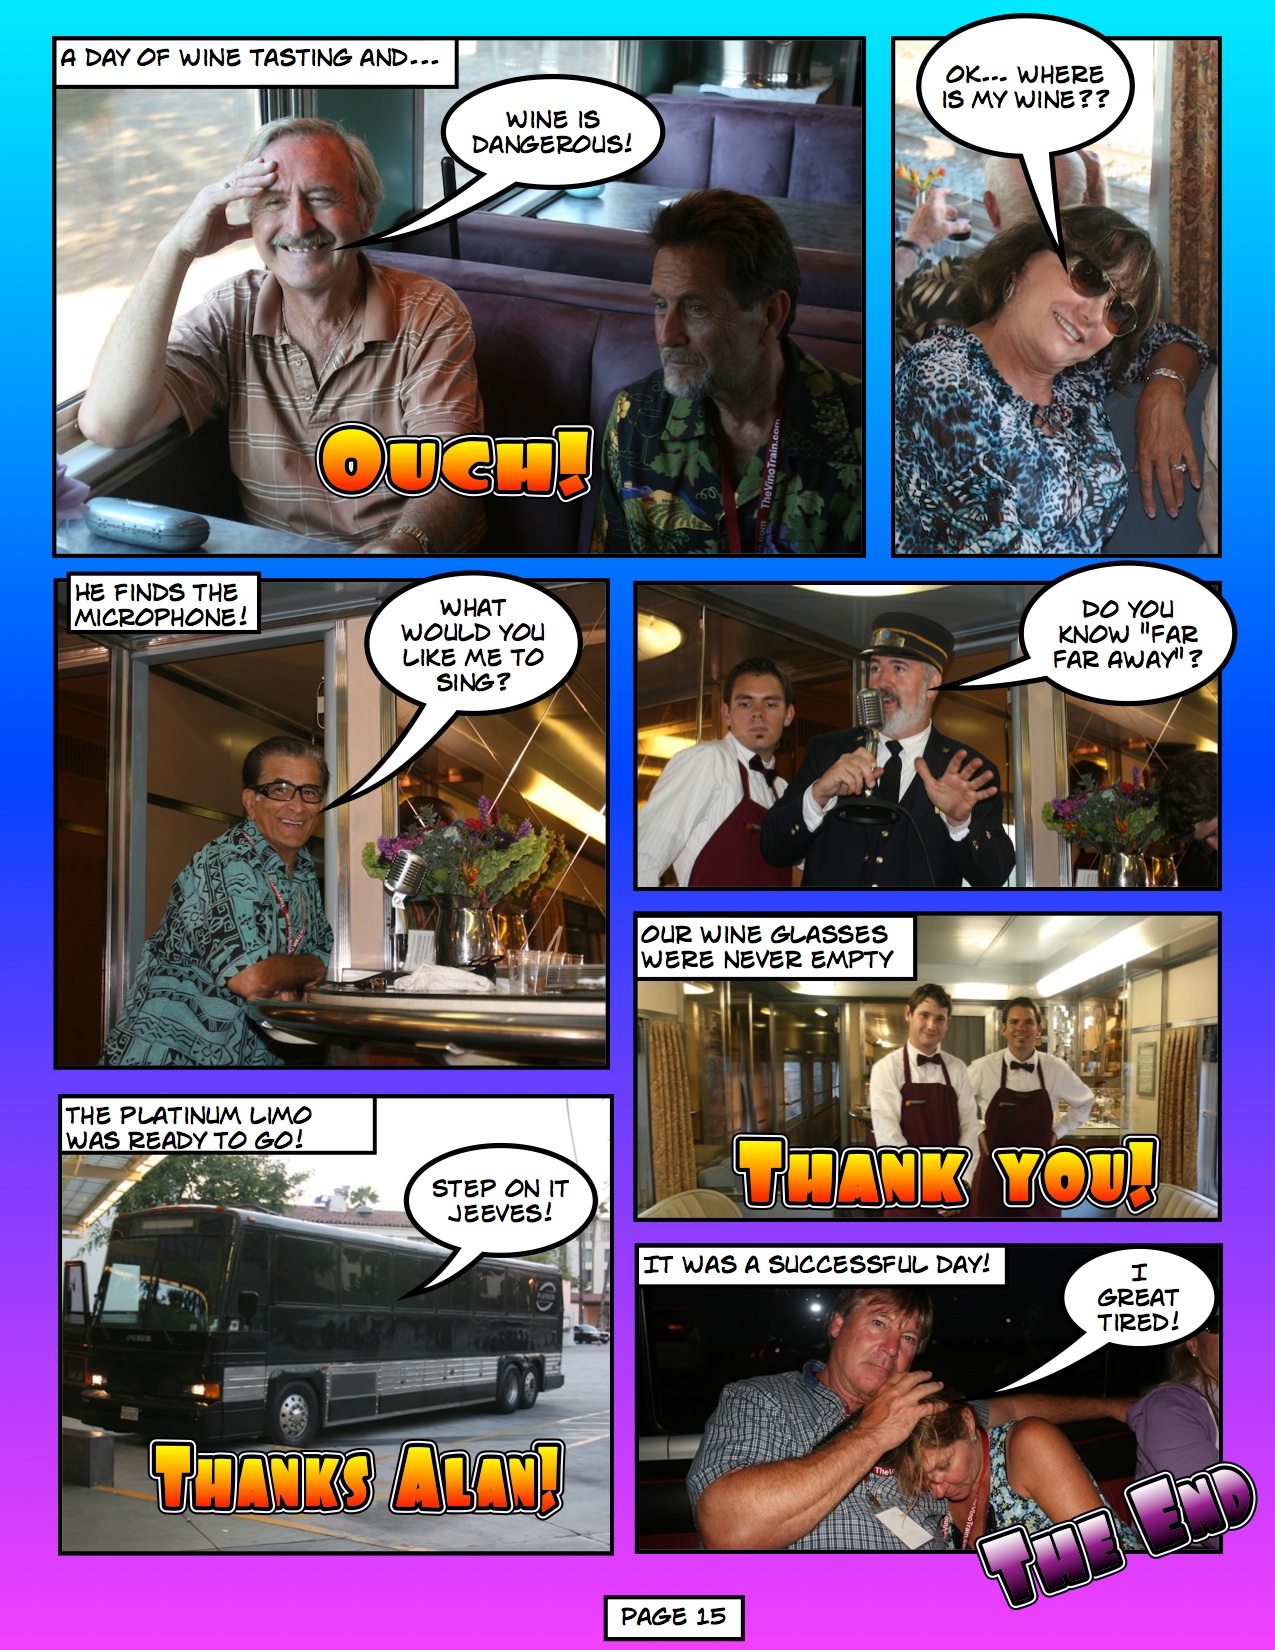 A comic view of the 2012 Vino Trip